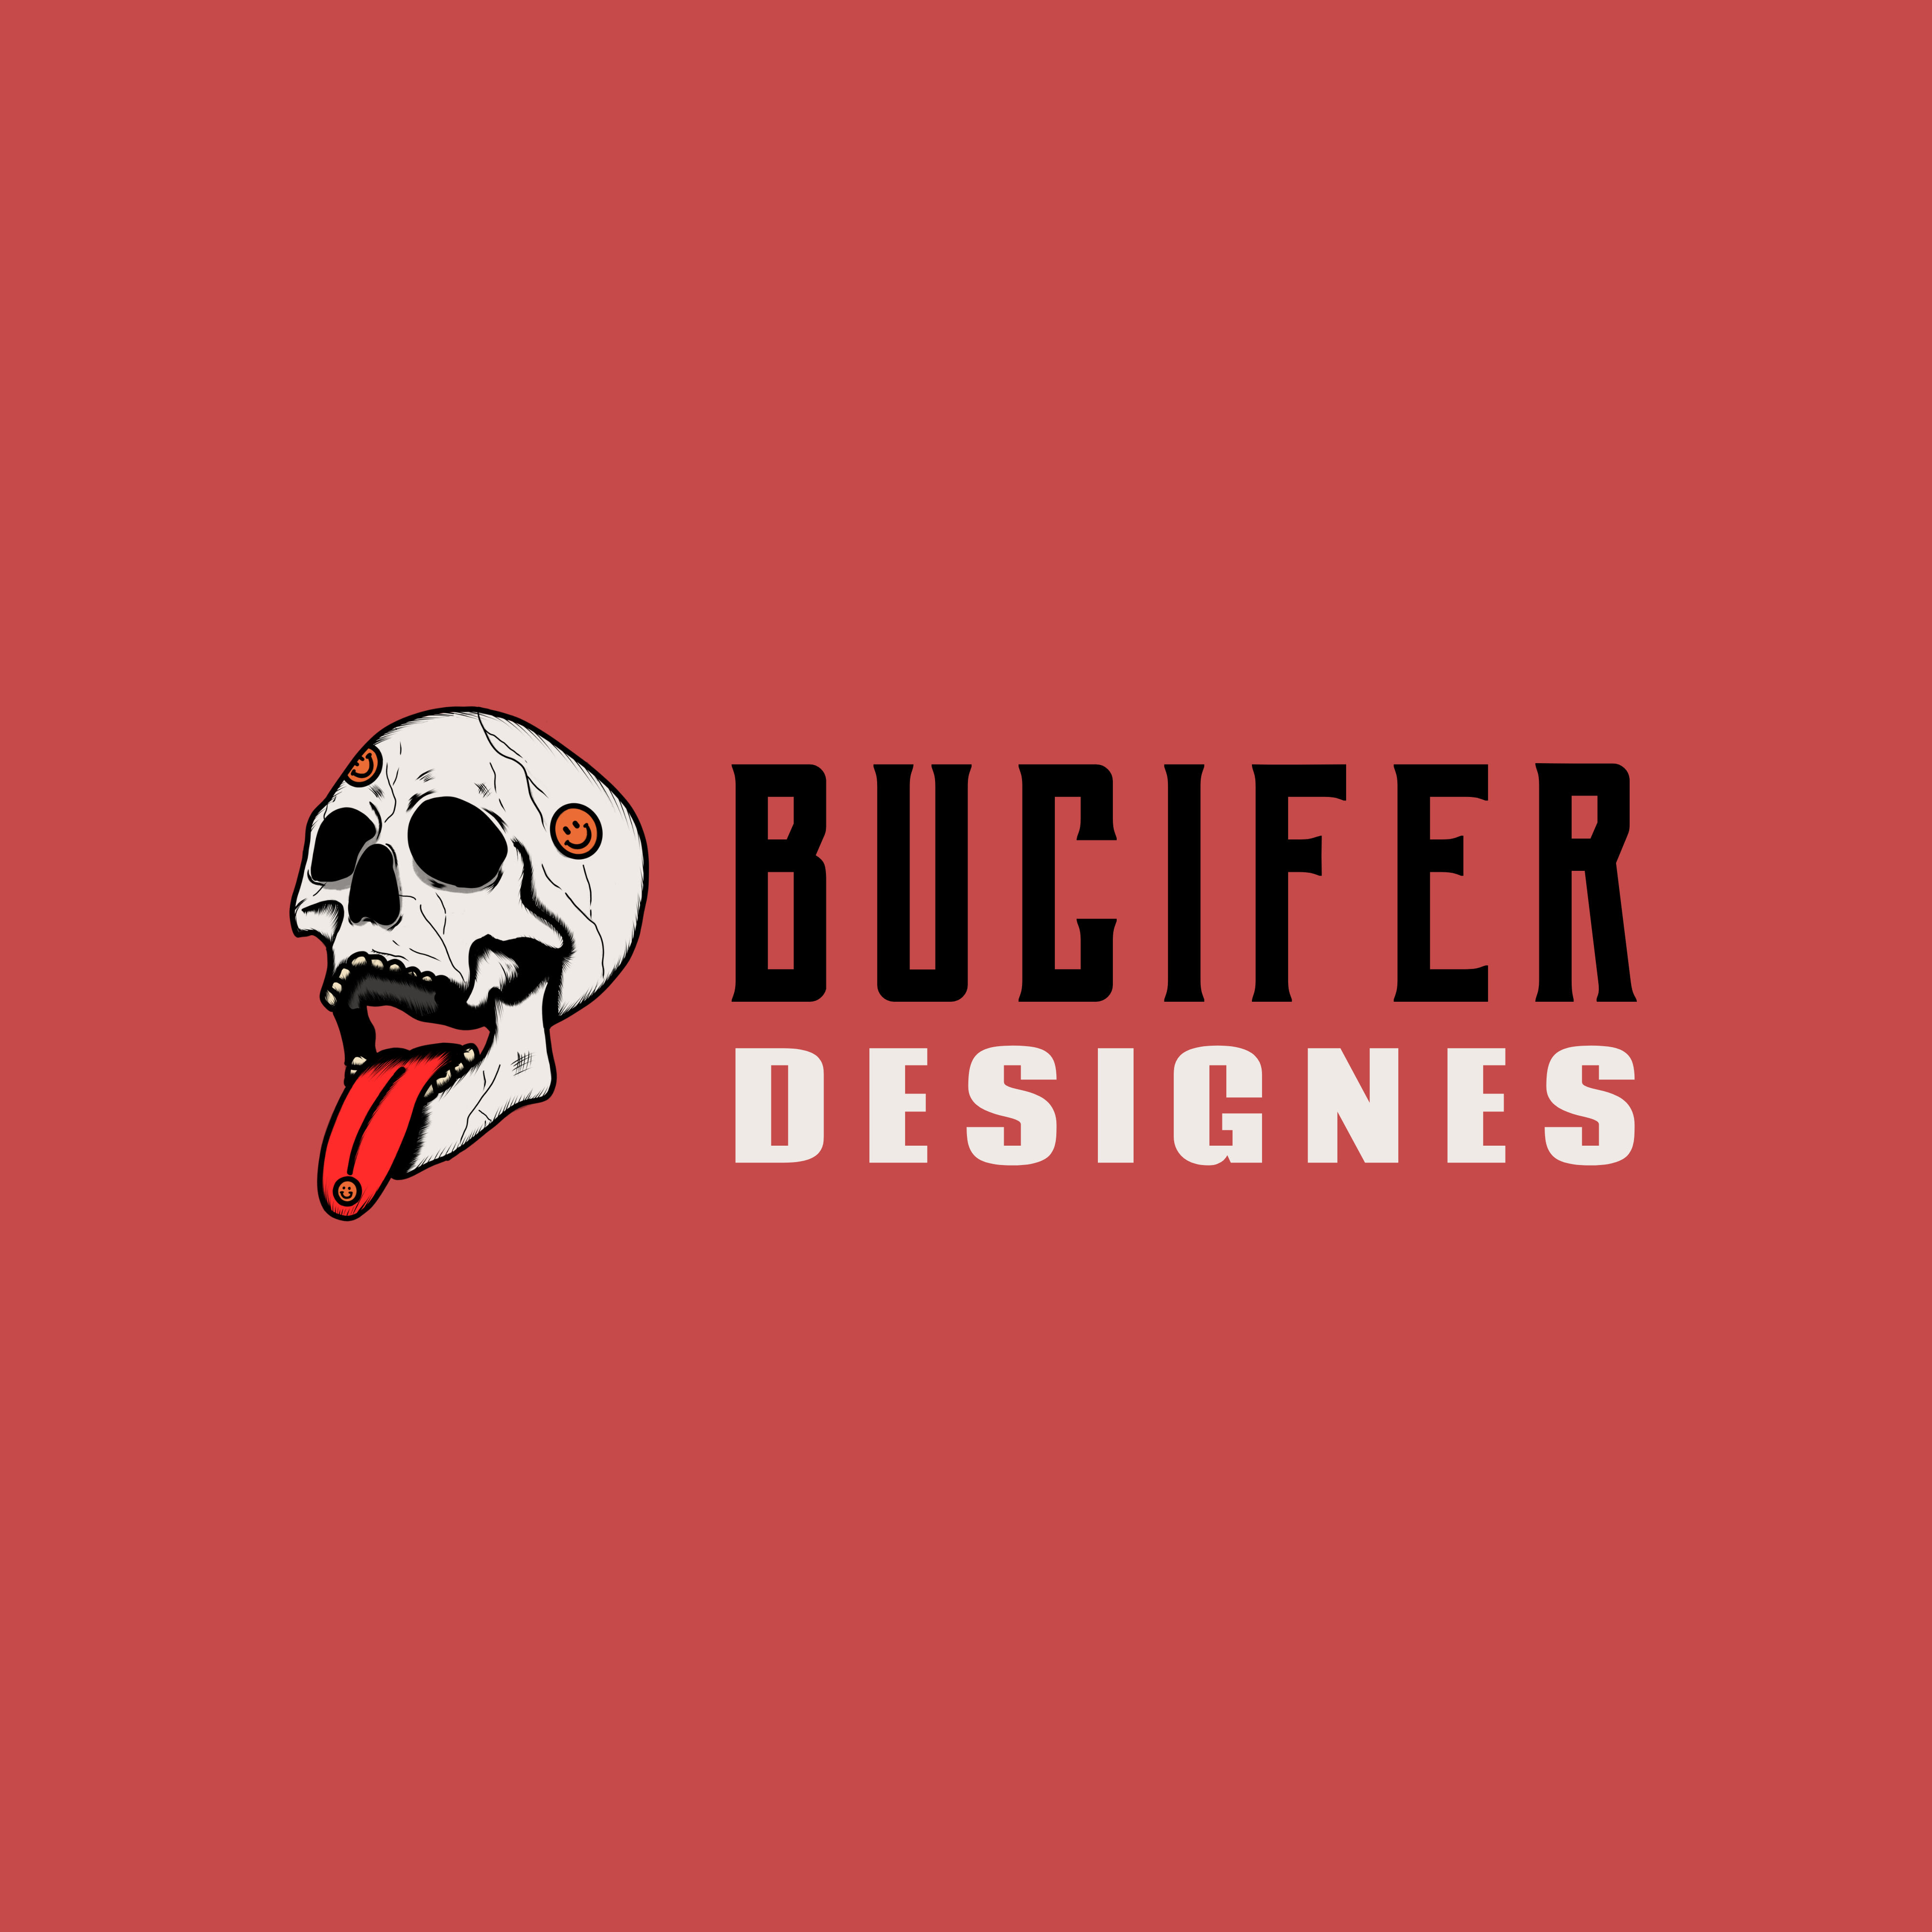 Make You A Nice Team Logo By Ibucifer Fiverr